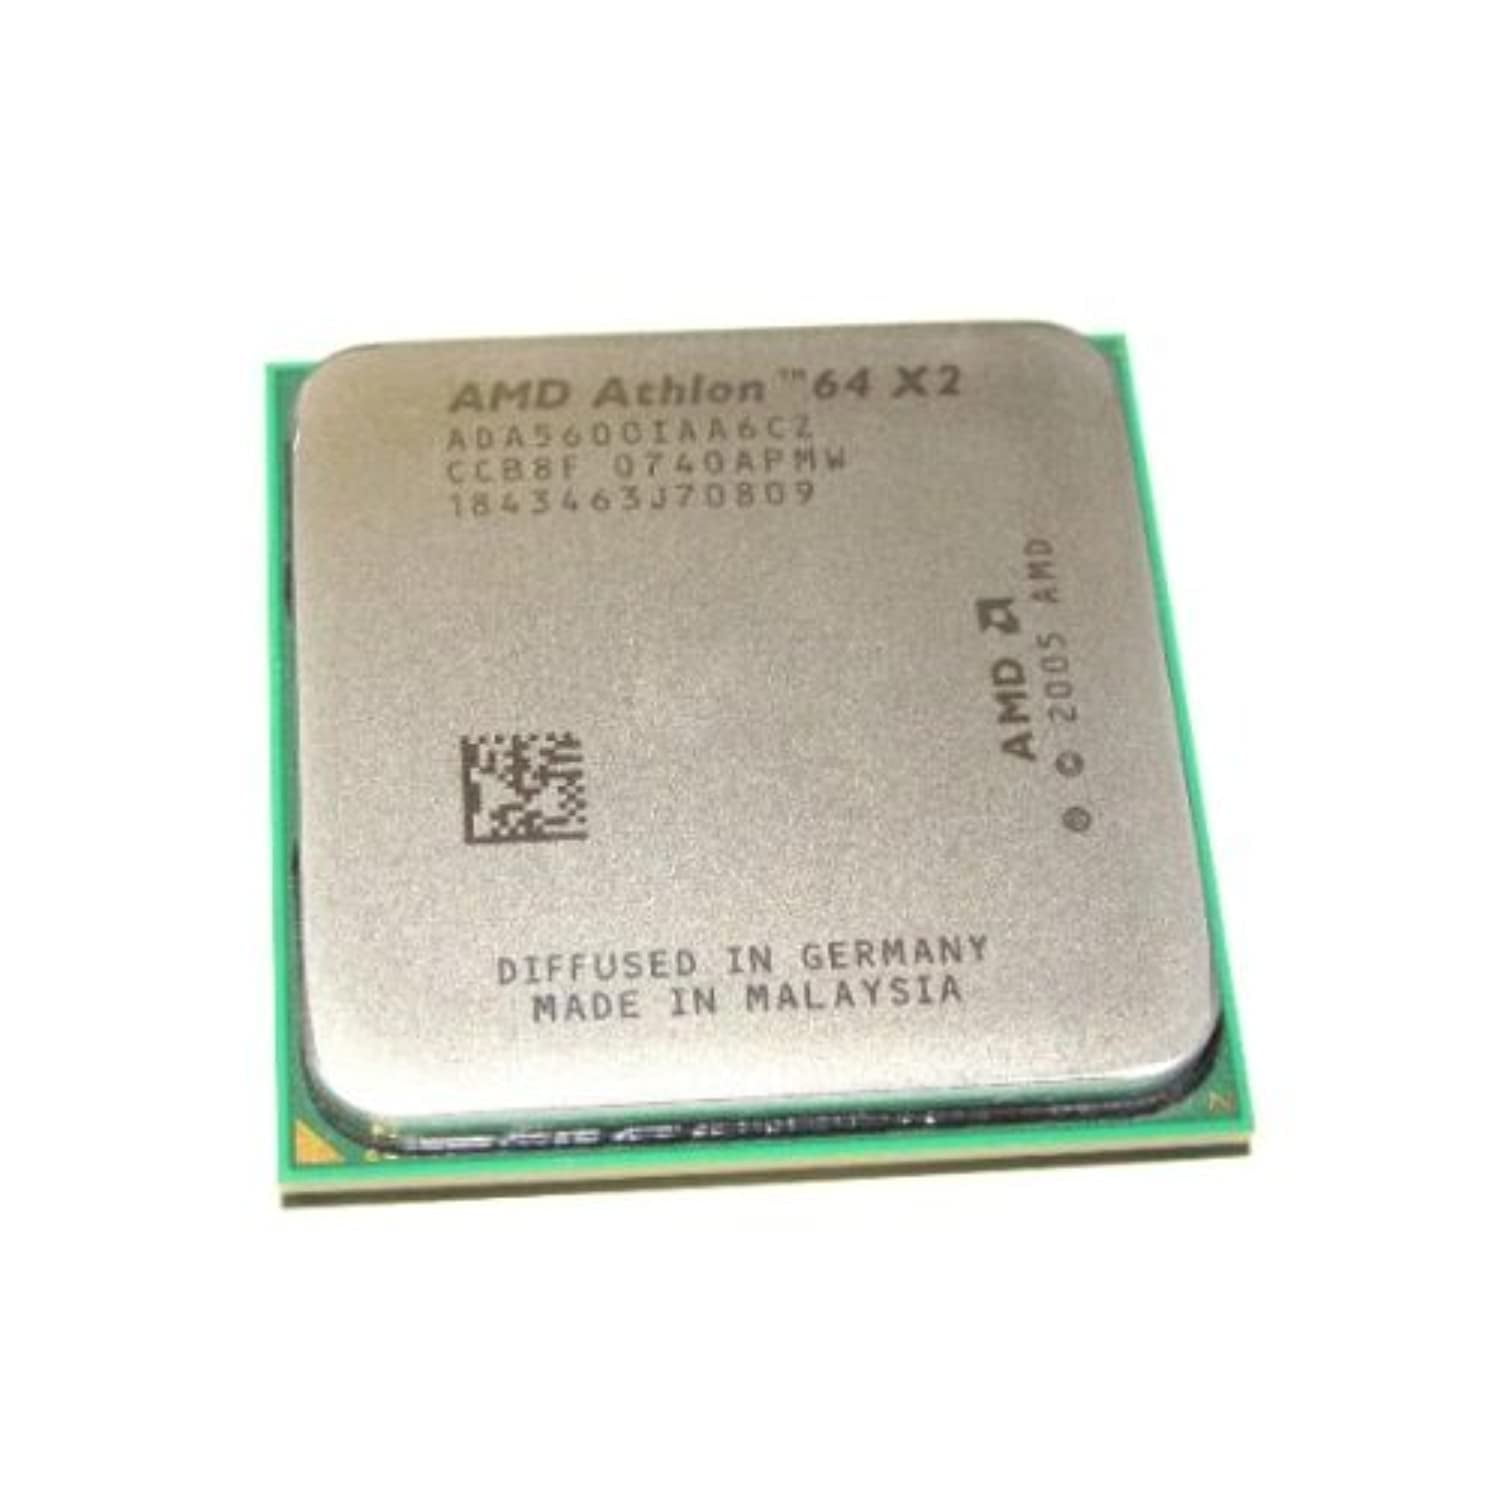 Amd athlon x2 сокет. AMD Athlon 64 x2 ada5600iaa6cz. AMD Athlon 64 x2 5000+. AMD Athlon 64 2001 процессор. AMD Athlon 64 x2 корпус.